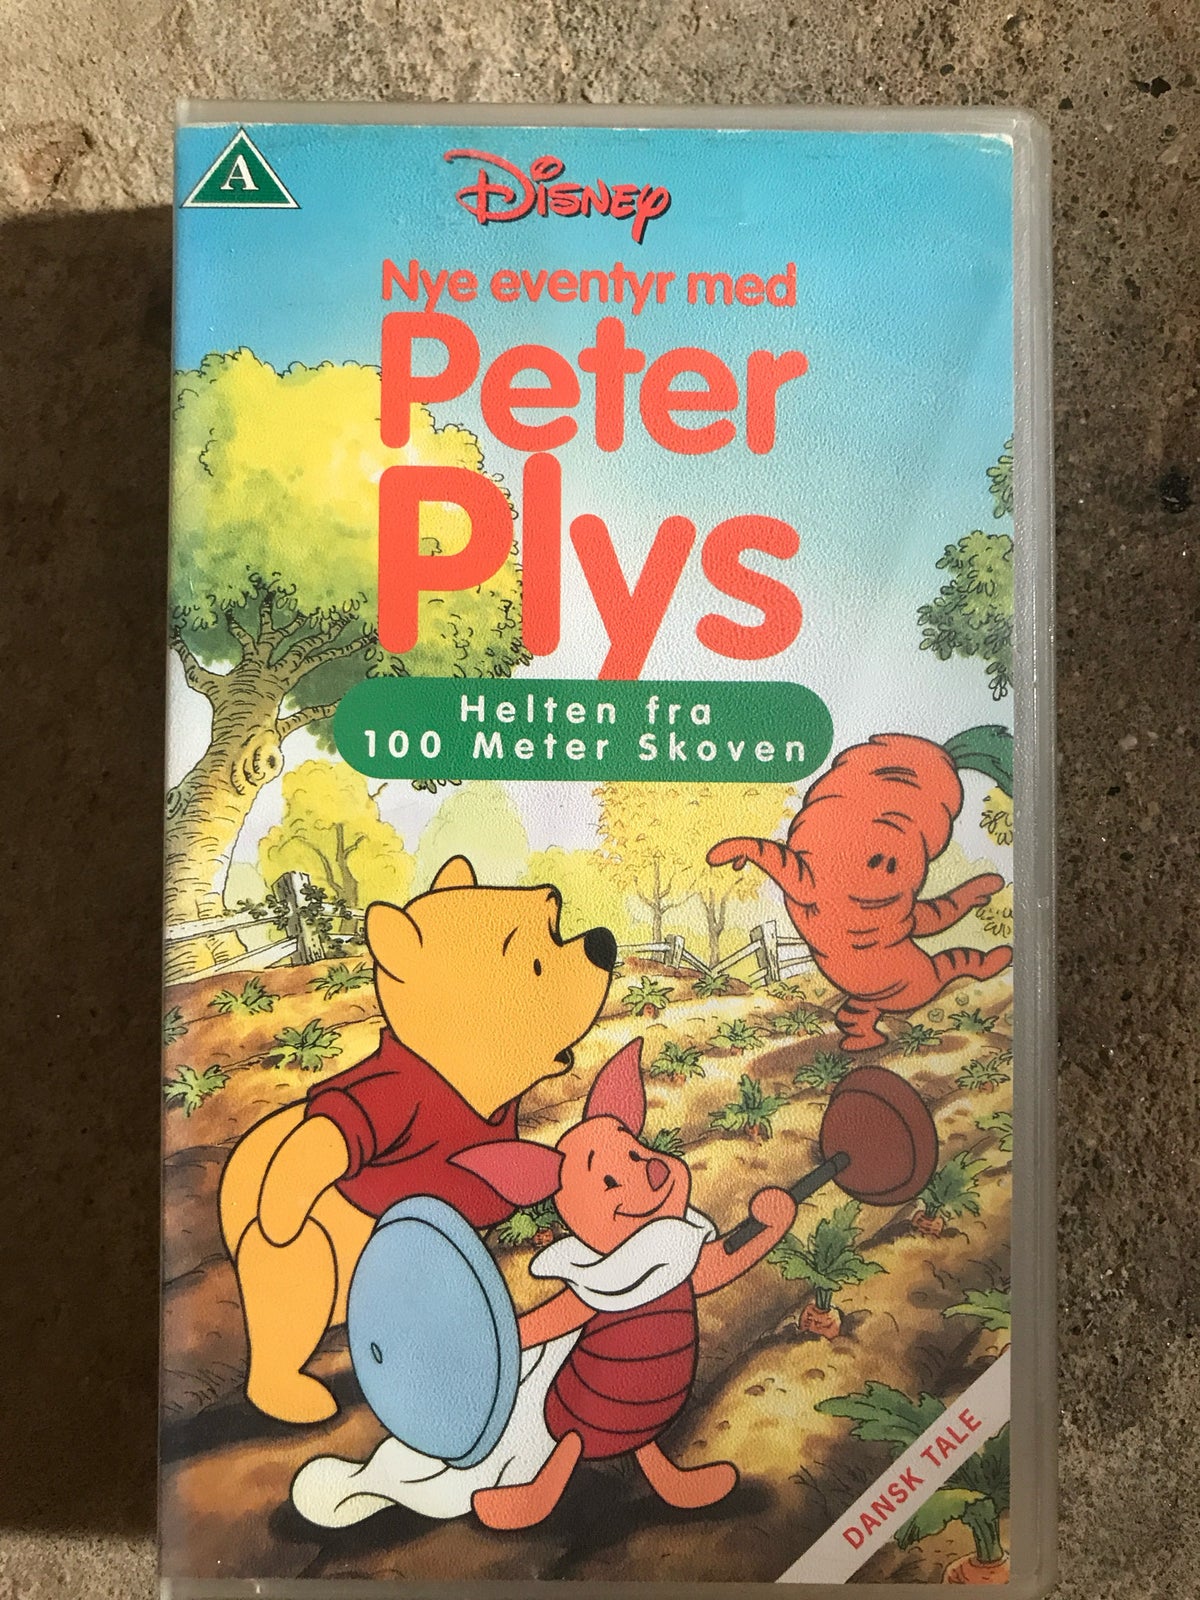 Børnefilm, Peter plys, instruktør Walt Disney